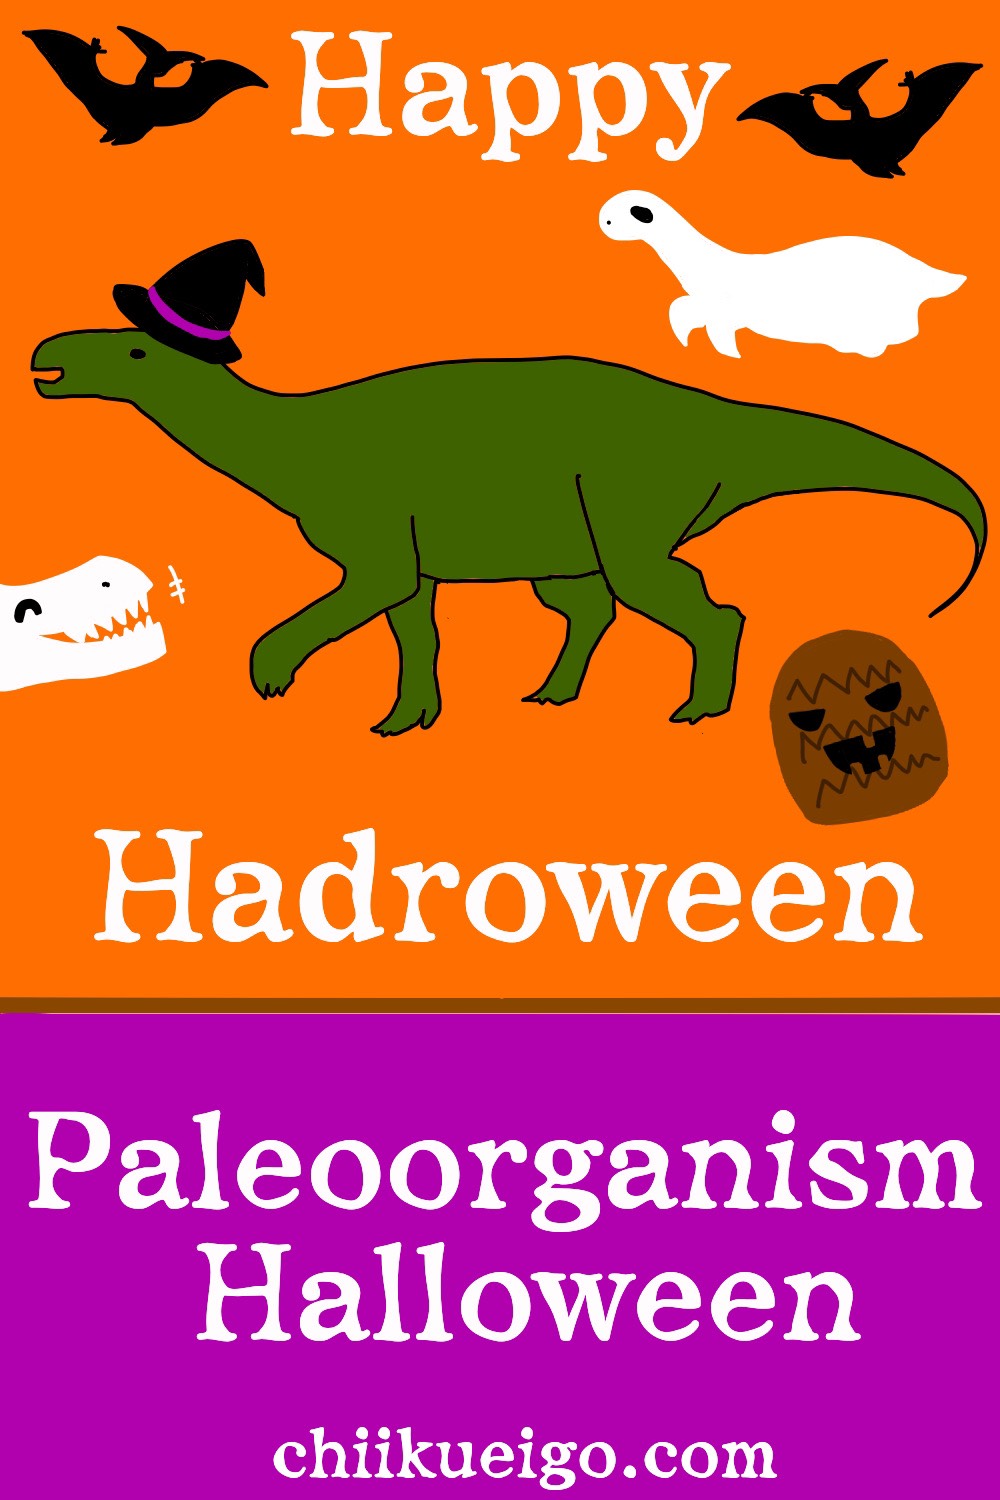 happy hadrosaurus halloween